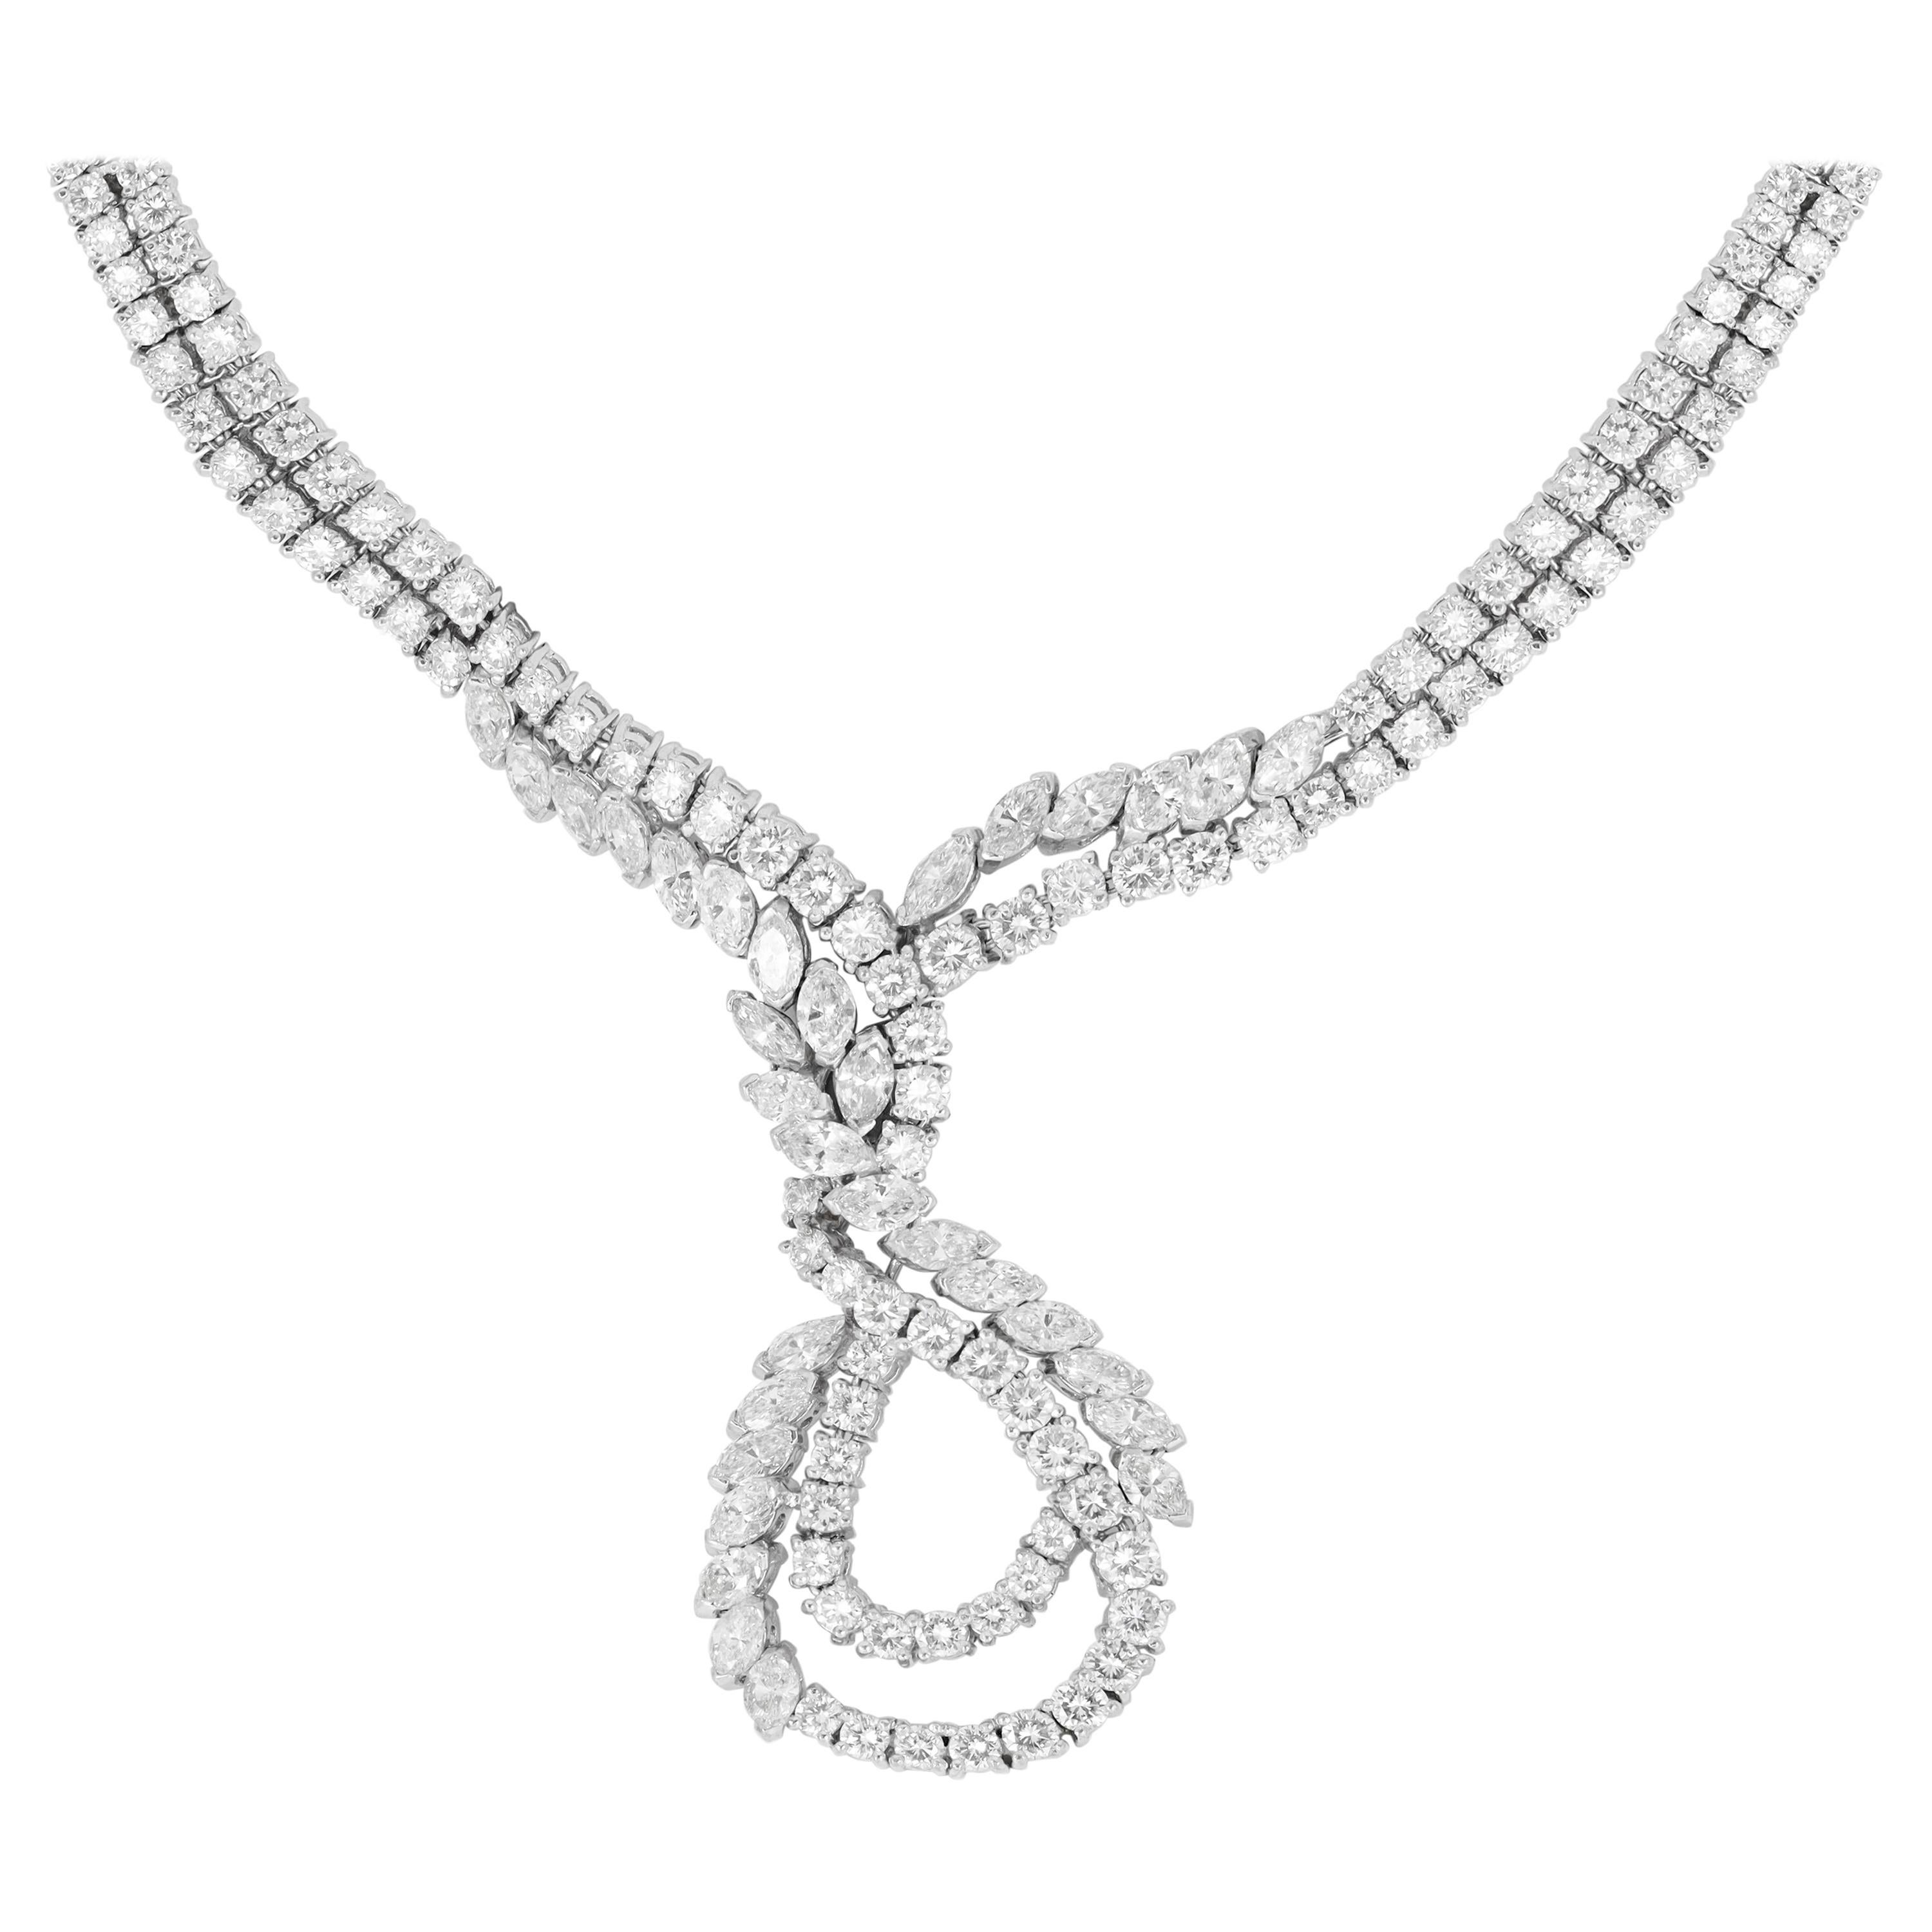 Platinum Diamond Double Row Necklace Featuring 27.90 Carats of Diamonds